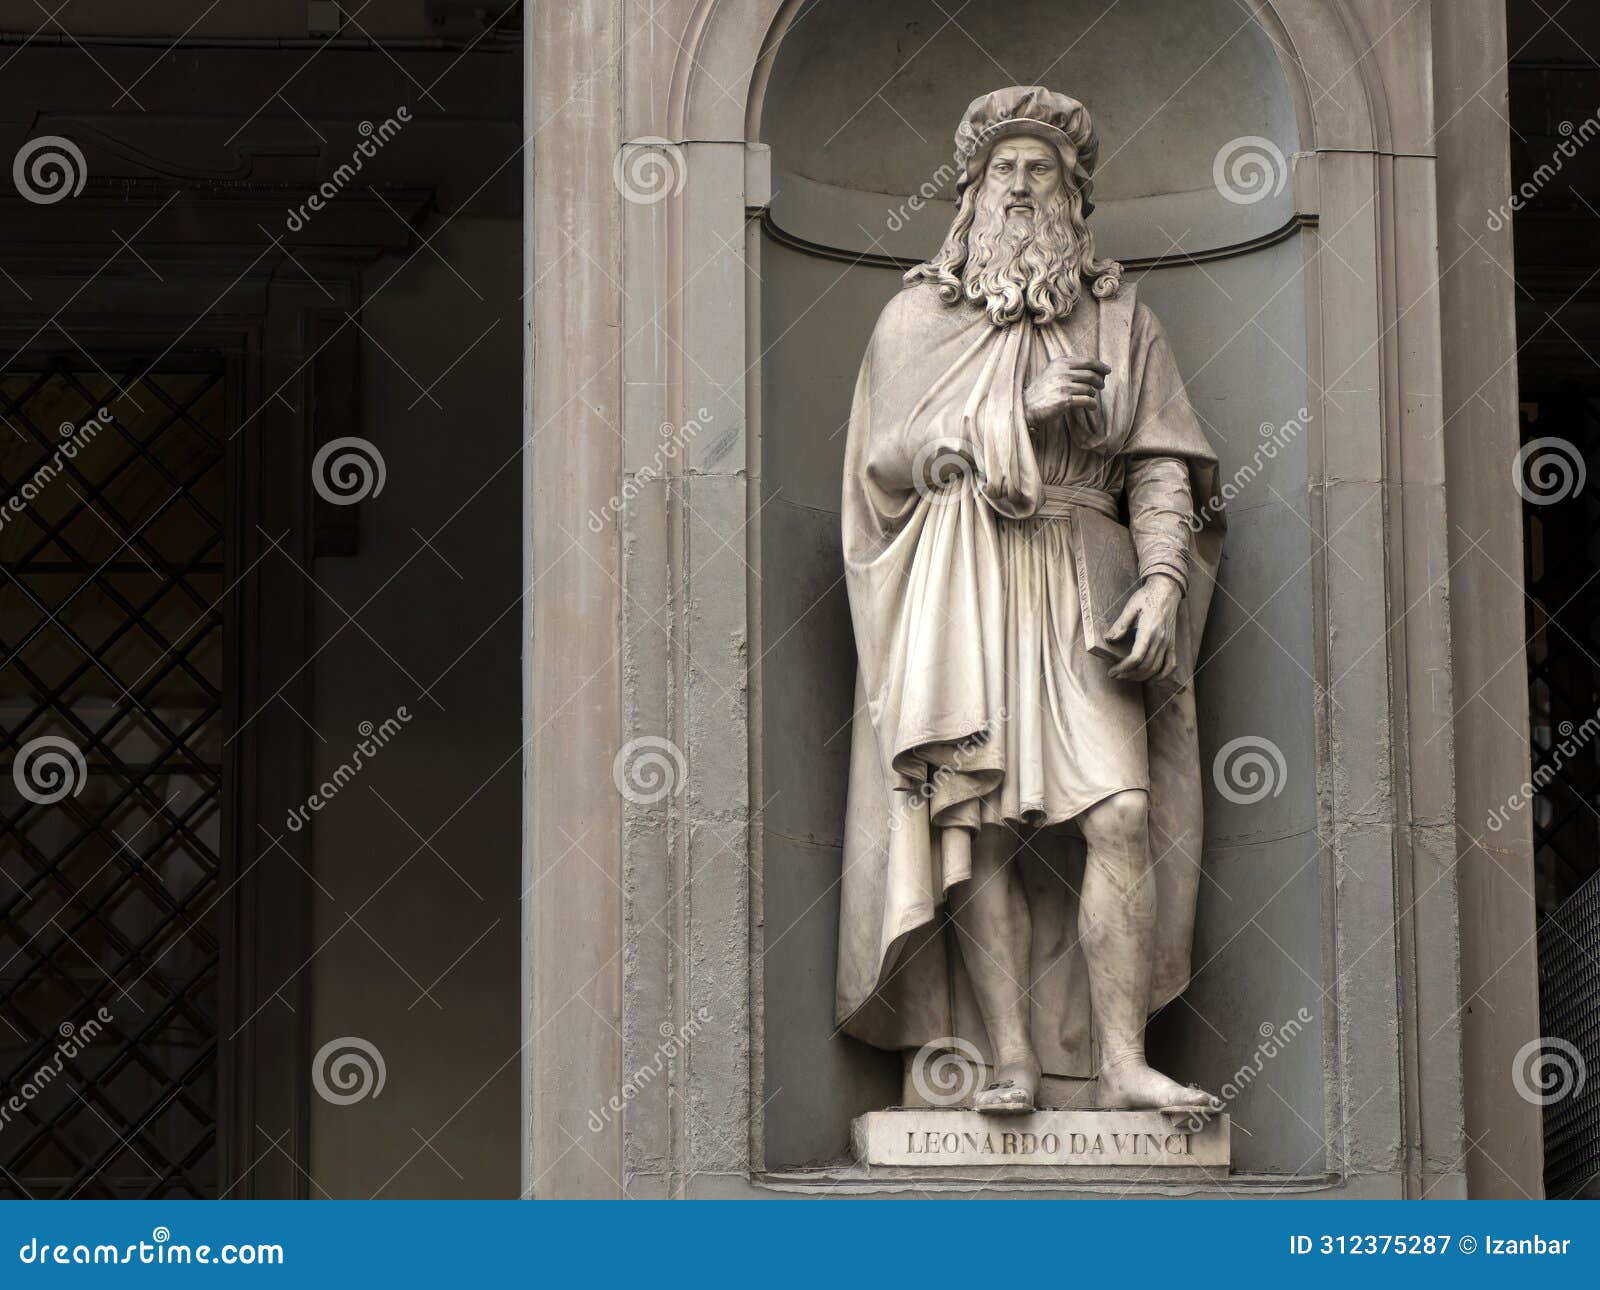 leonardo da vinci statue made by luigi pampaloni, 1839. it is located in the uffizi courtyard, in florence